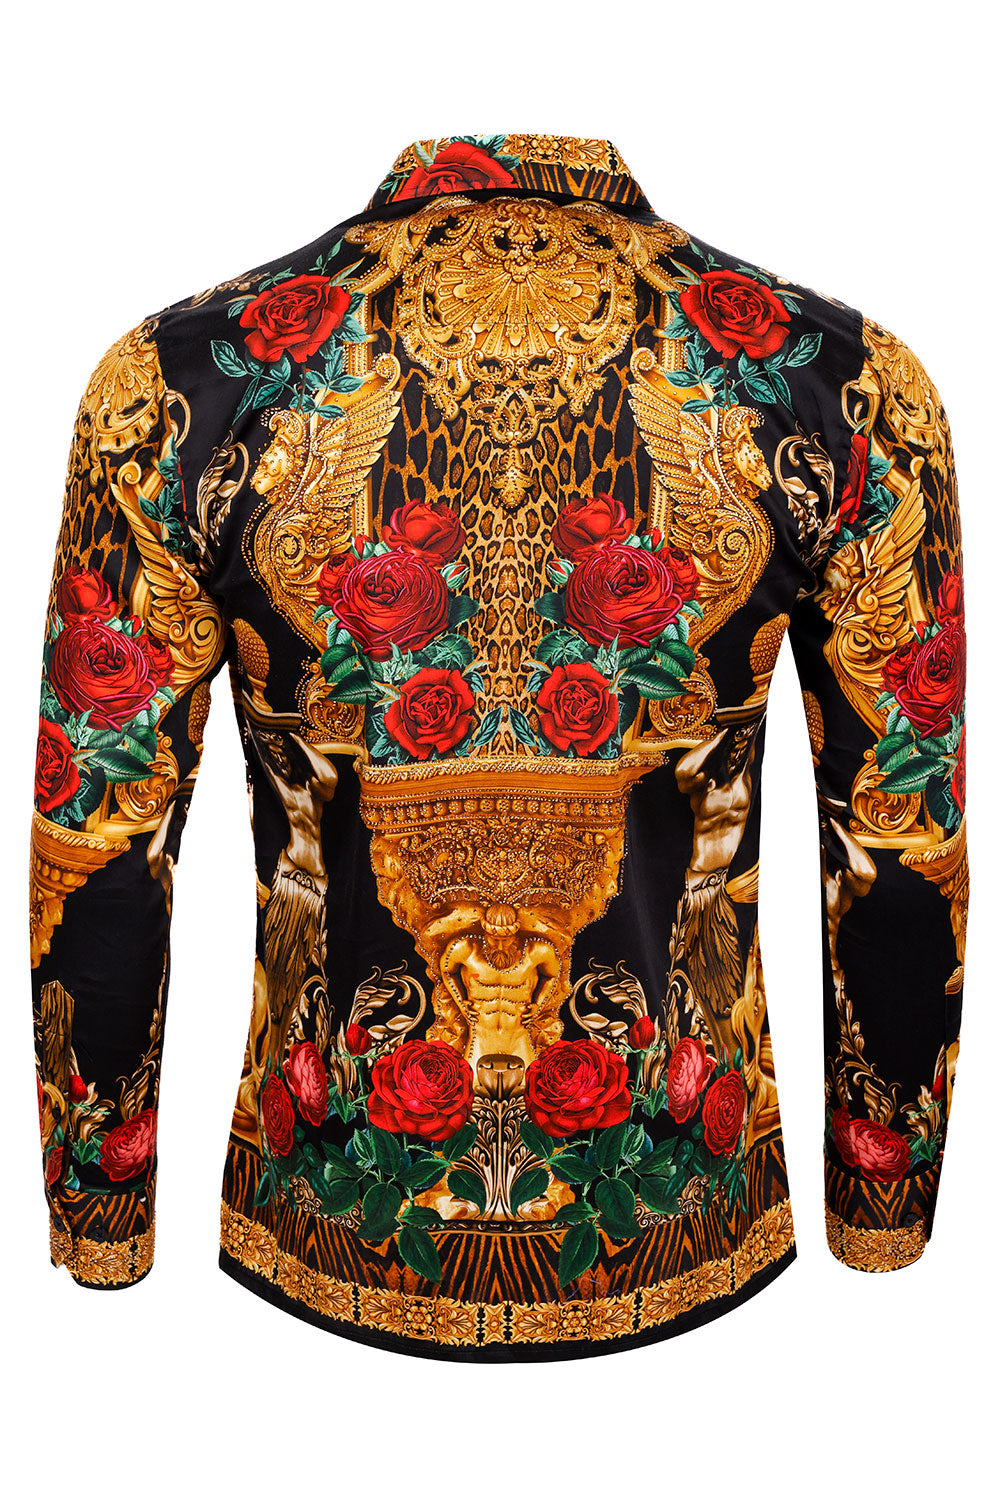 BARABAS Men's Rhinestone Floral Unicorn Long Sleeve Shirts 3SPR418 Black Gold